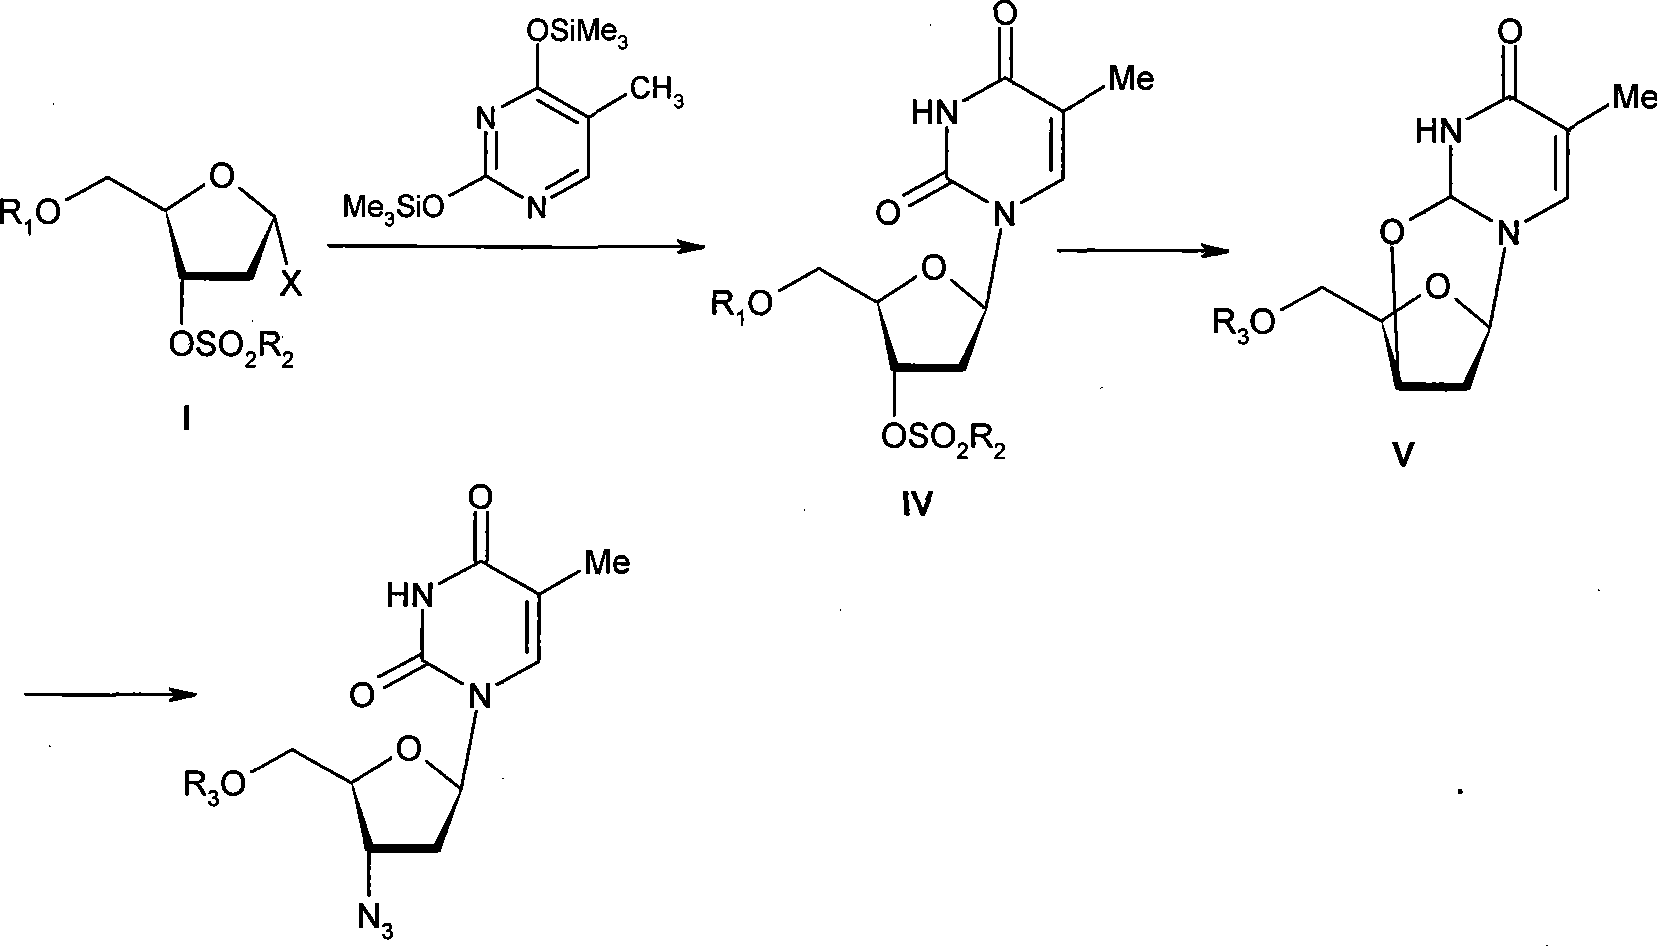 Intermediate for synthesizing azidothimidine, preparation thereof and use in azidothimidine synthesis